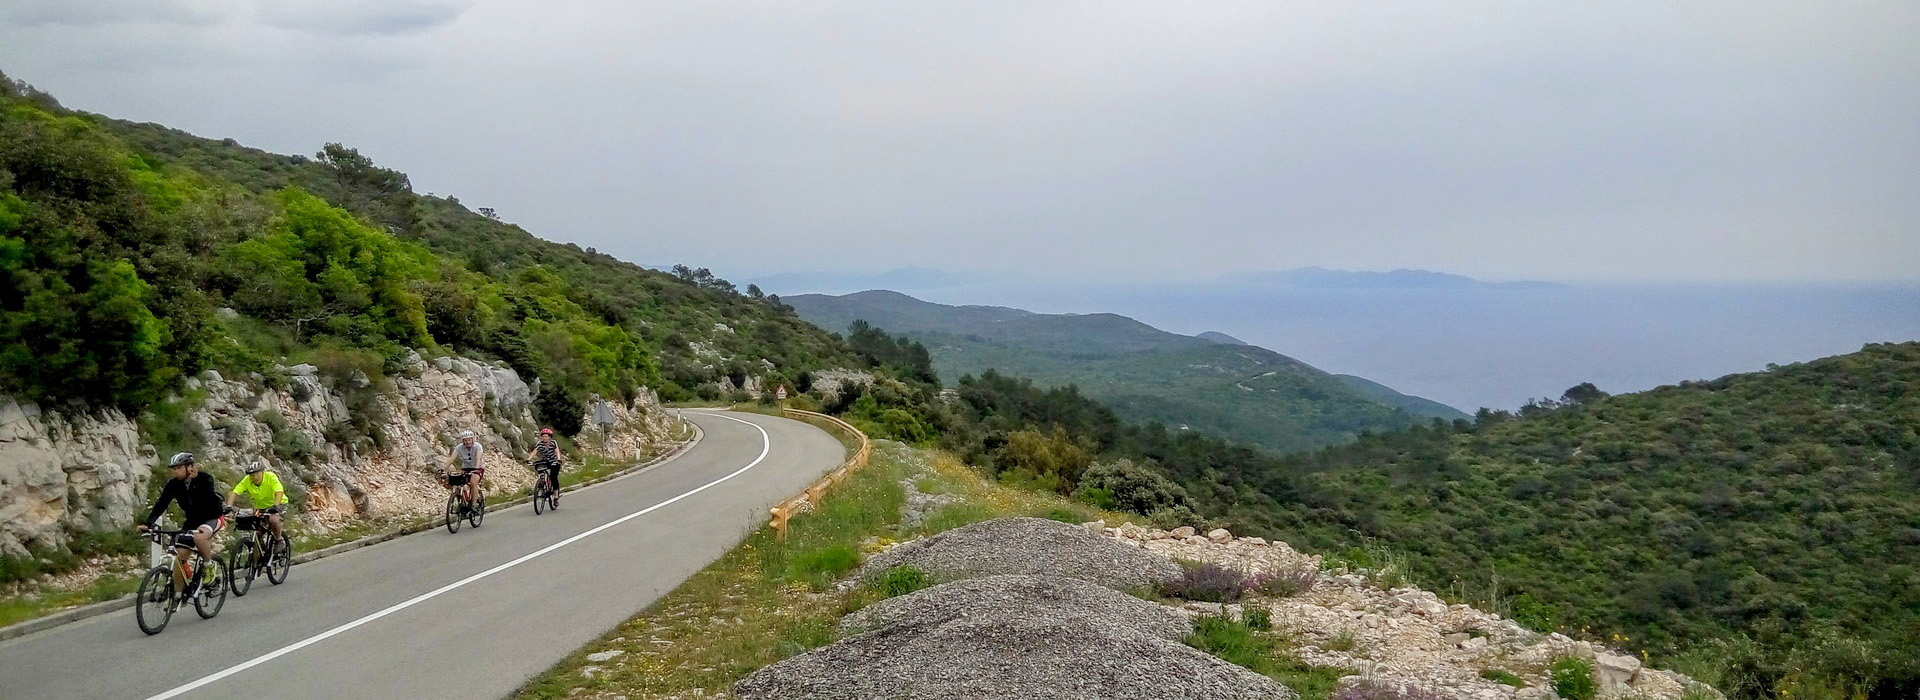 Cycling on the Dalmatian Coast guided holiday - Korcula